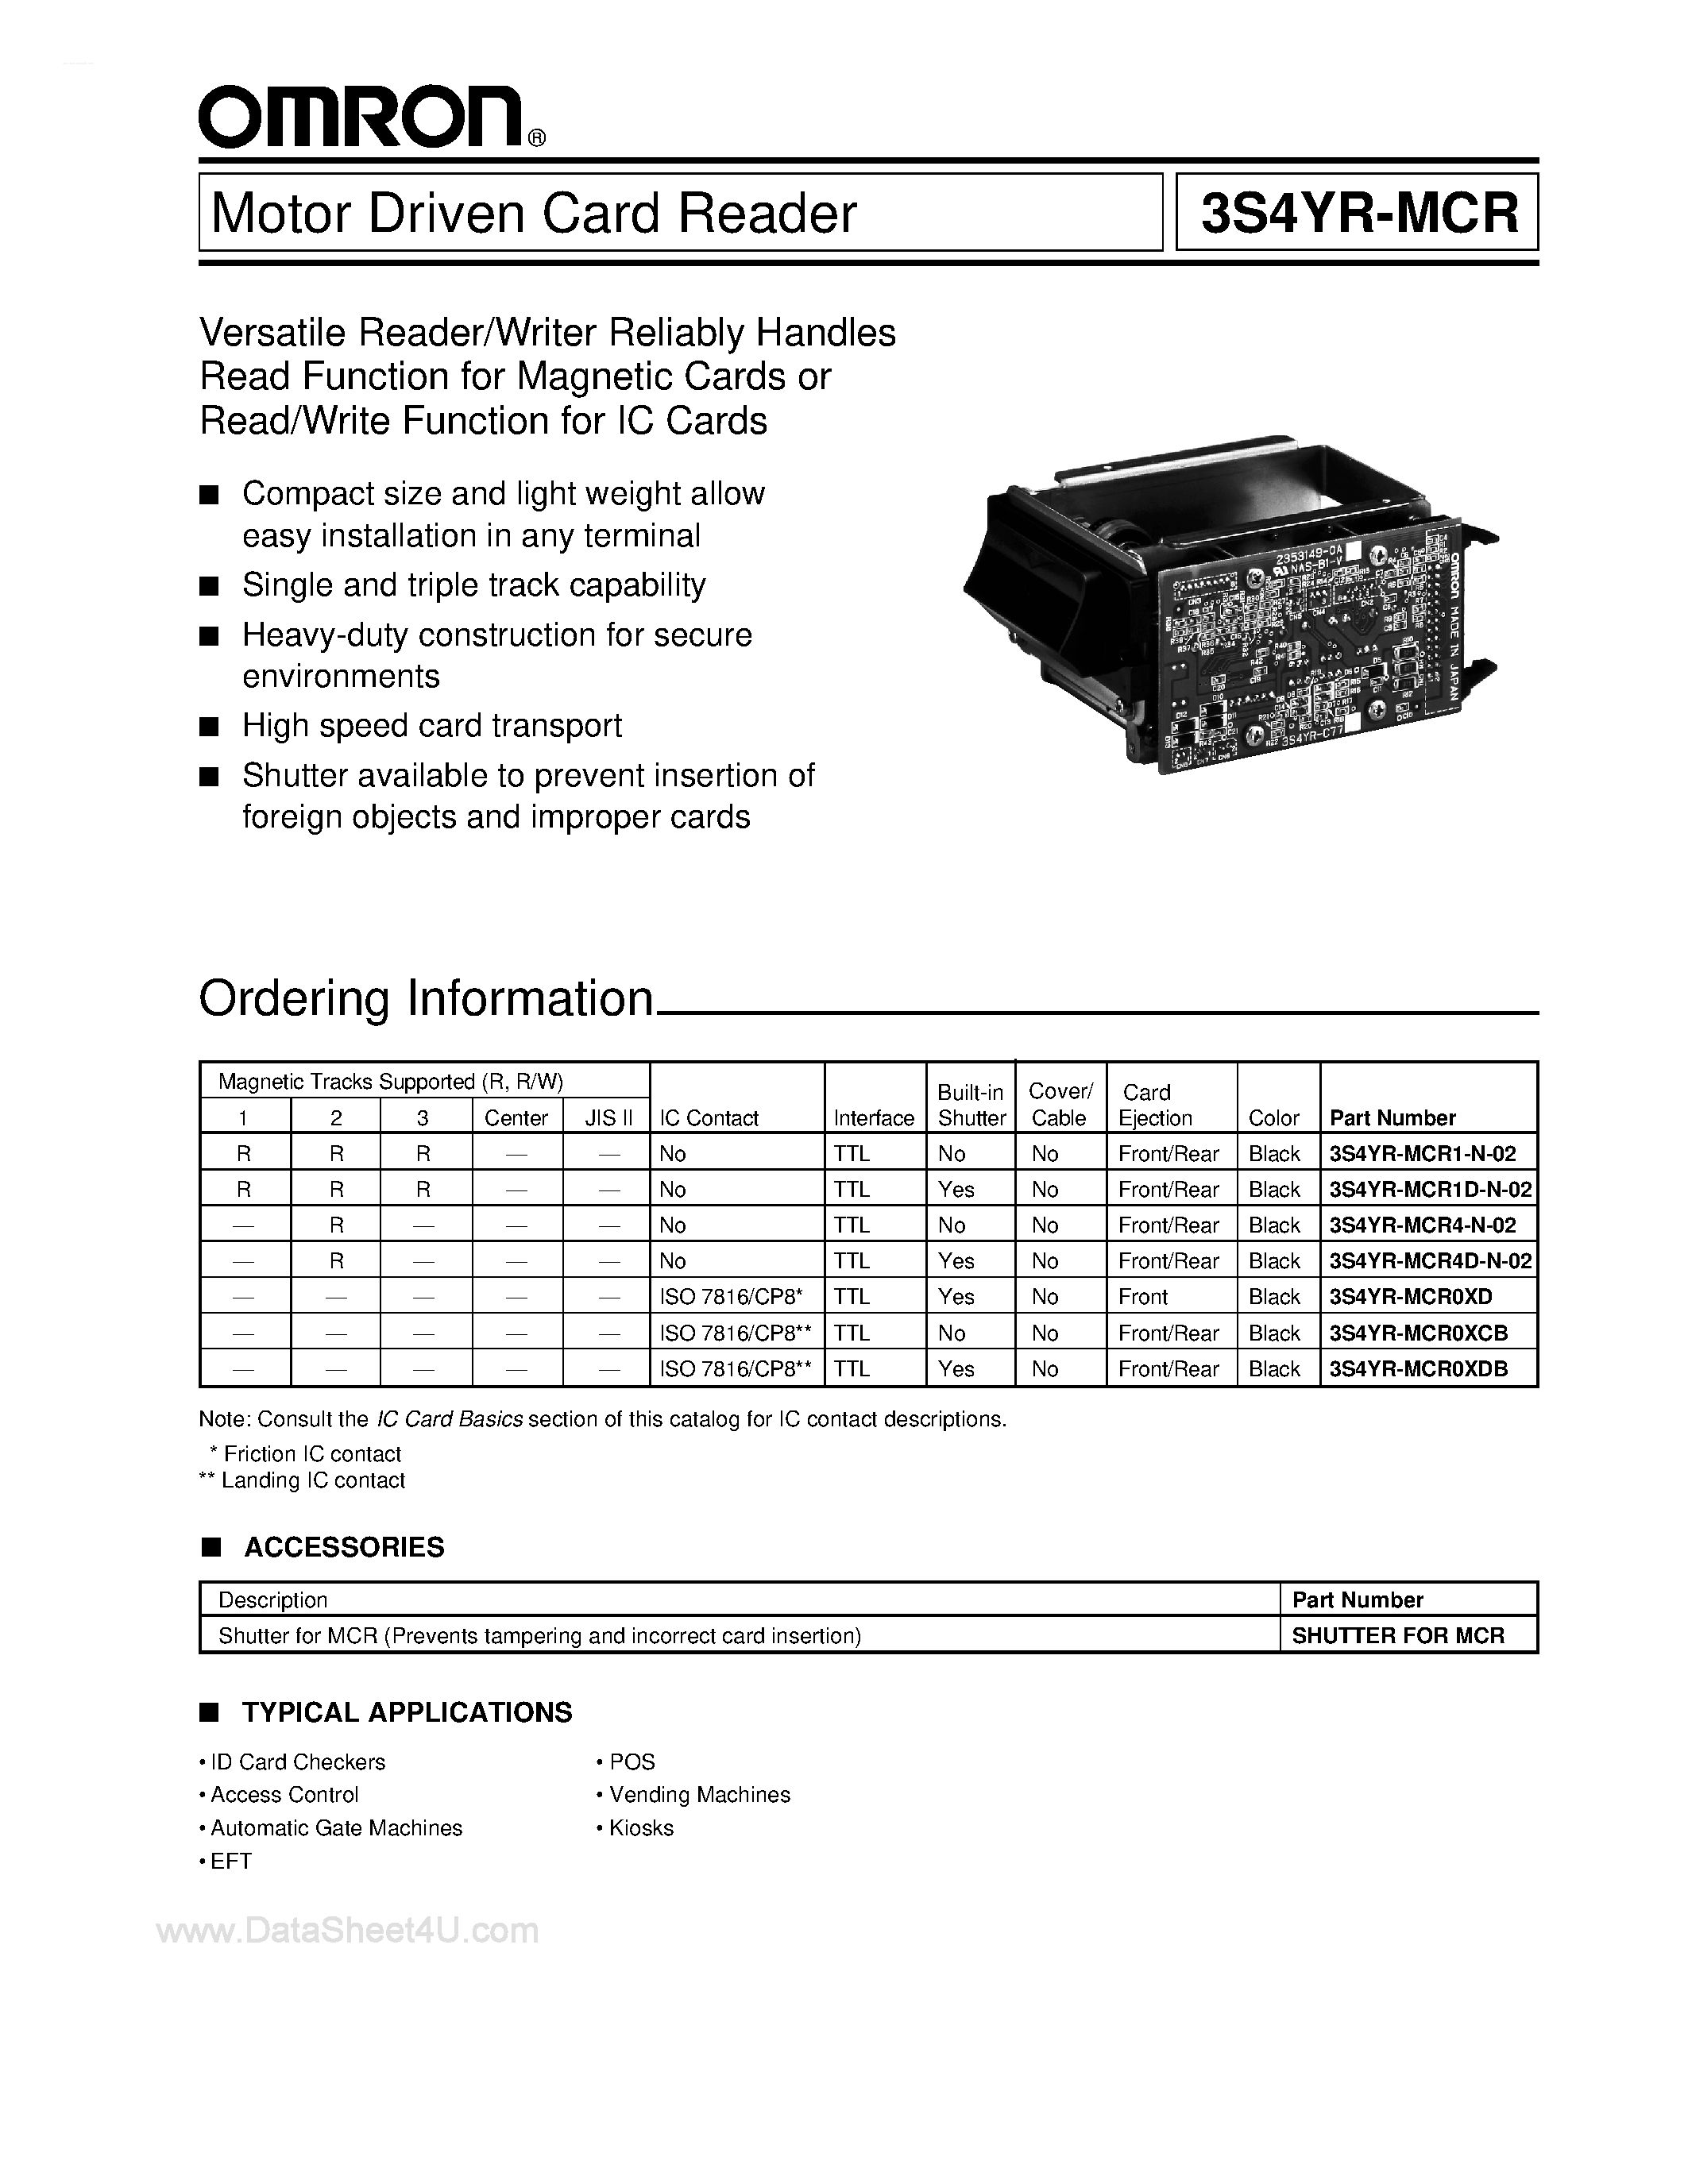 Datasheet 3S4YR-MCR - Motor Driven Card Reader page 1